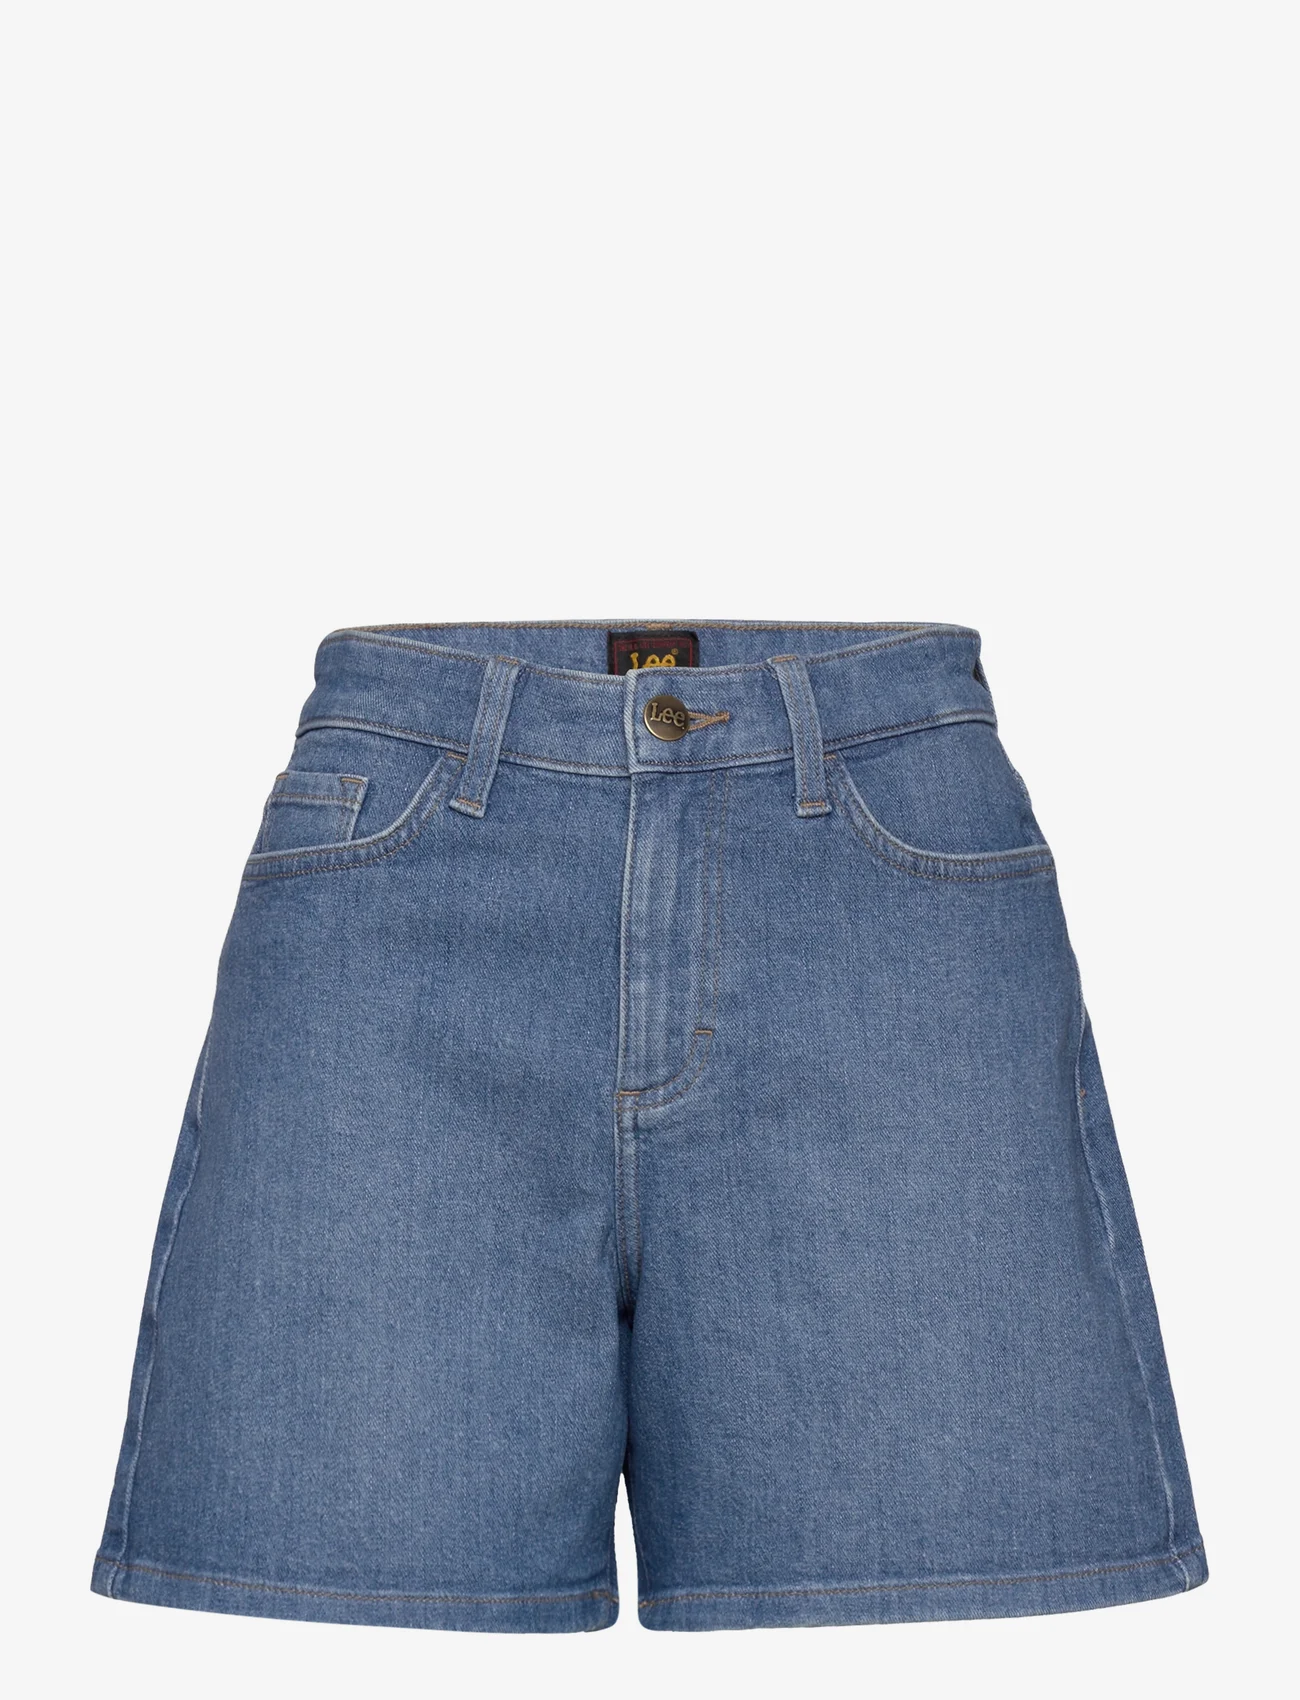 Lee Jeans - STELLA SHORT - denim shorts - the bang - 0